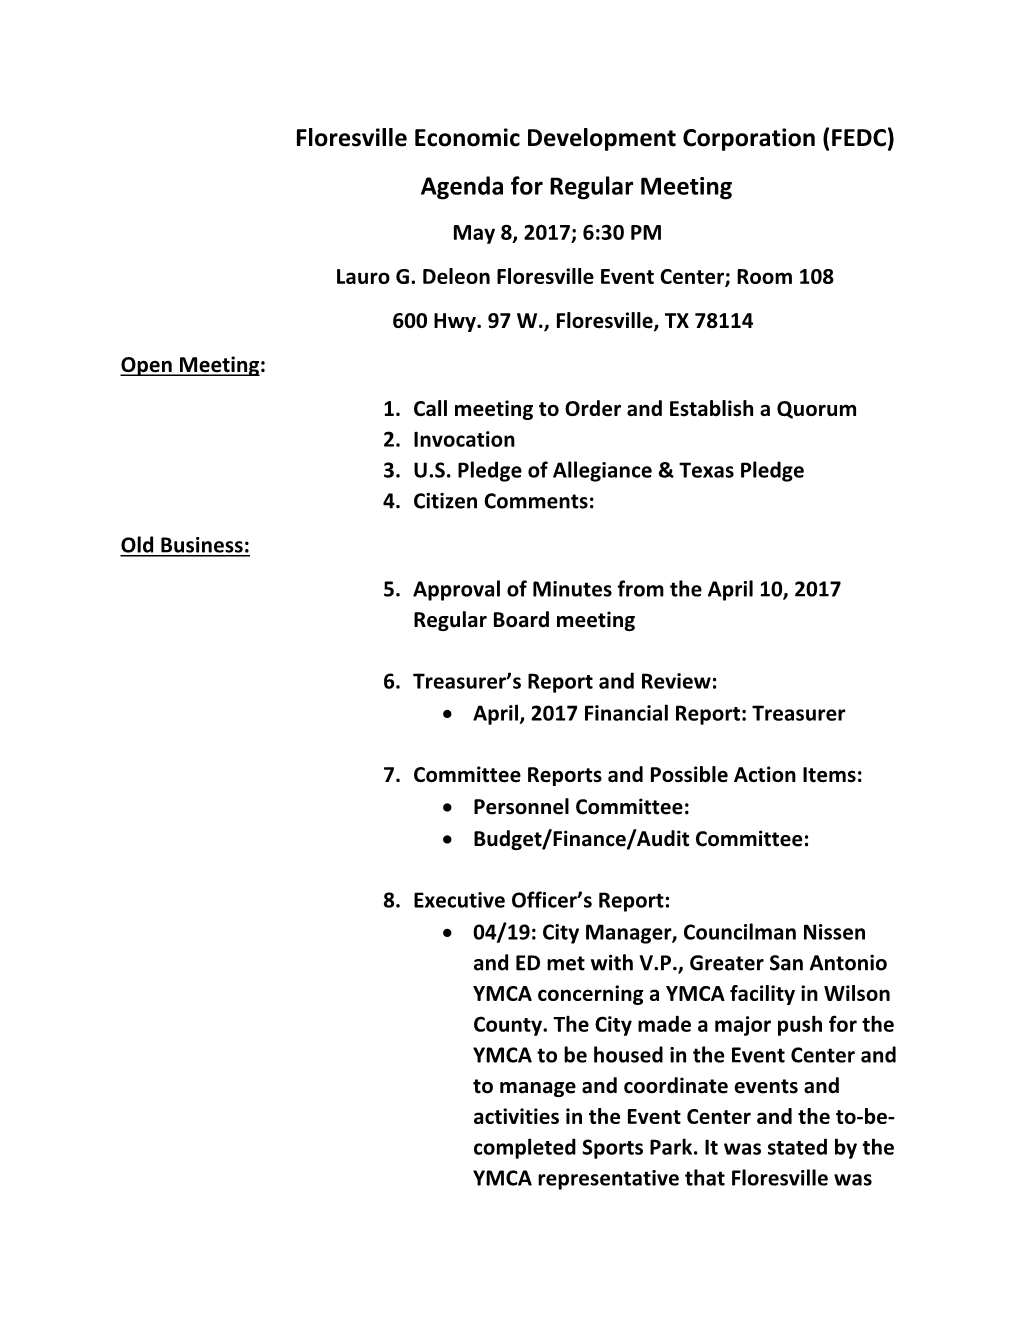 (FEDC) Agenda for Regular Meeting May 8, 2017; 6:30 PM Lauro G